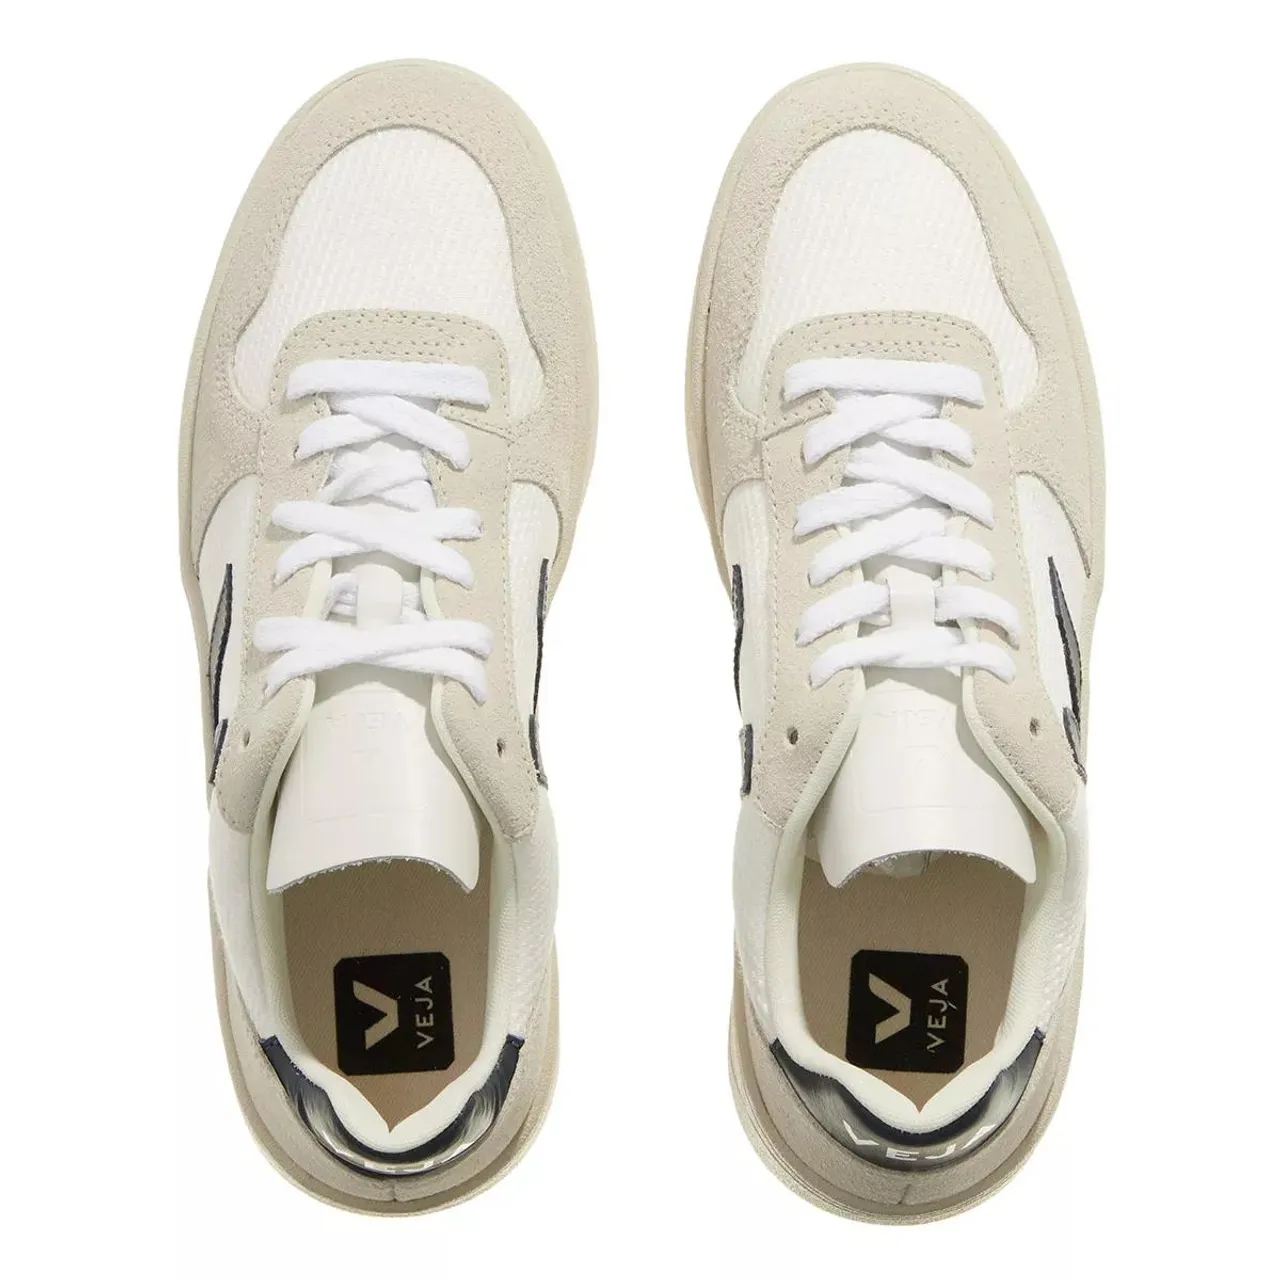 Veja Sneakers - V-10 - white - Sneakers for ladies